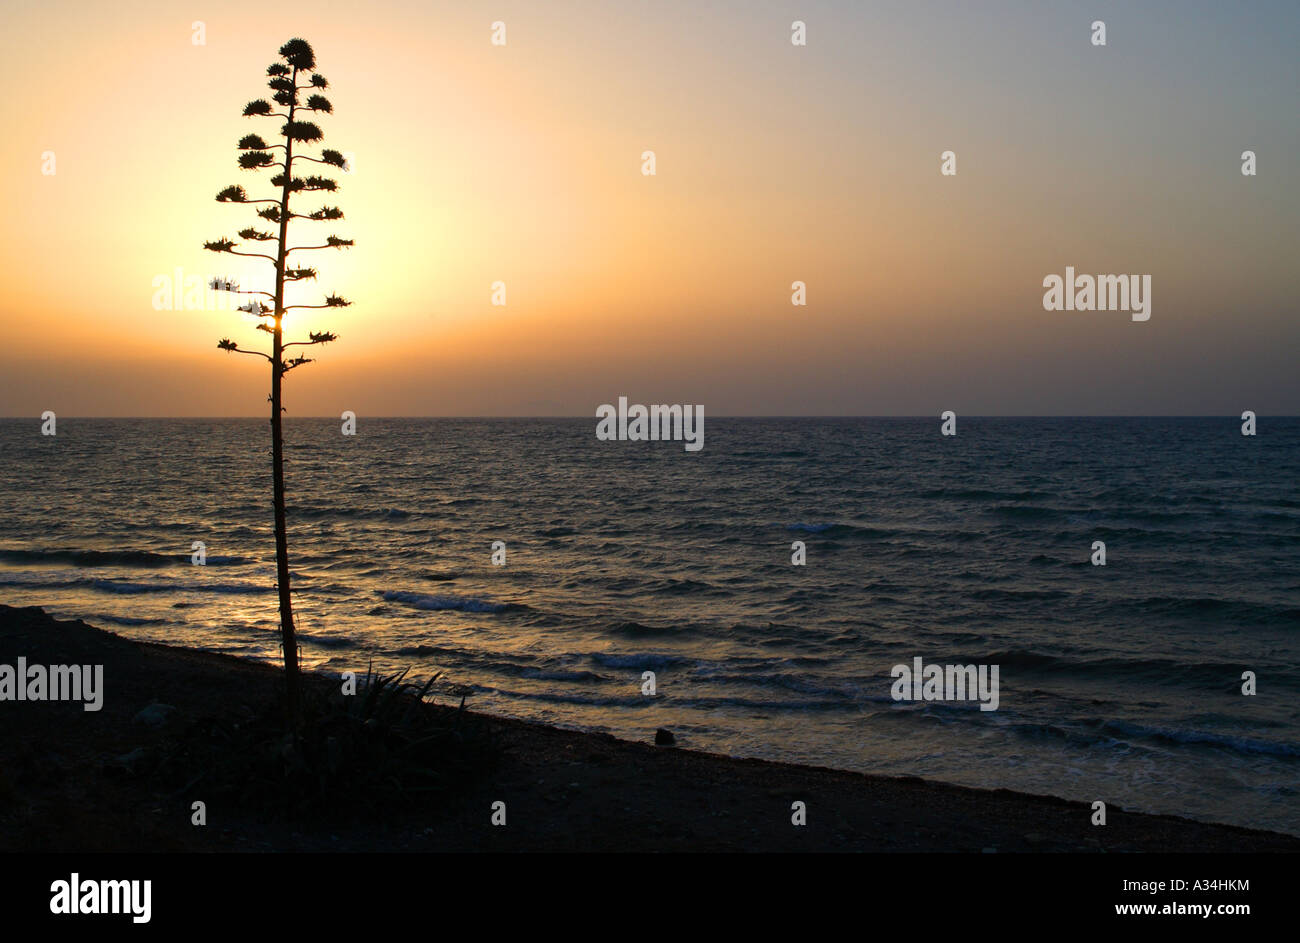 Agave, Century Plant (Agave americana), sunset at the sea with flourishing Century Plant, Greece Stock Photo